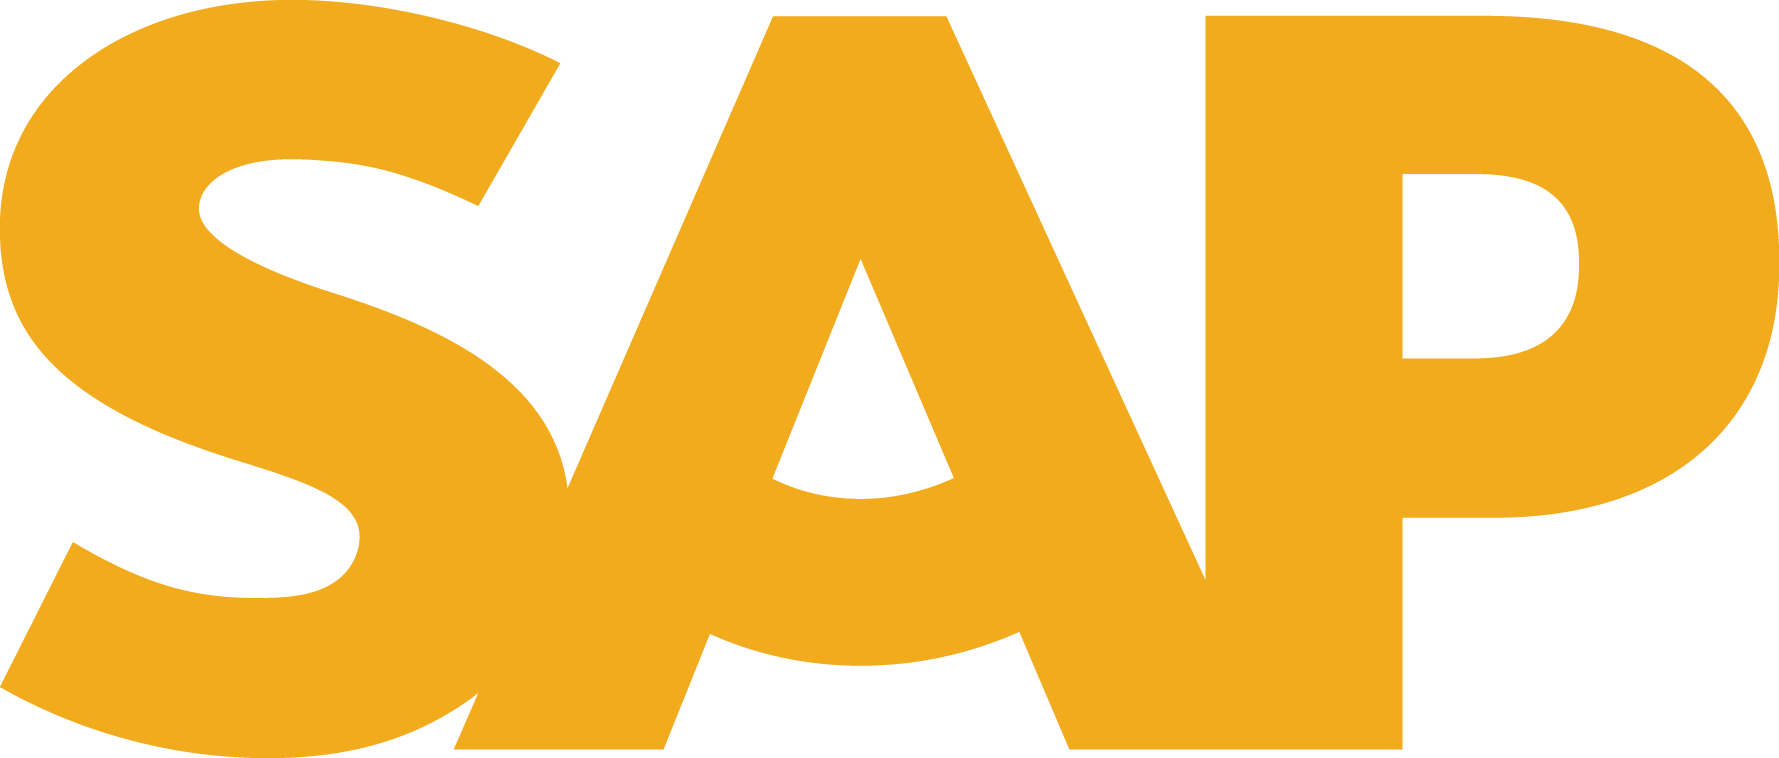 SAP Logo - SAP saluting the new ERA with New Logo